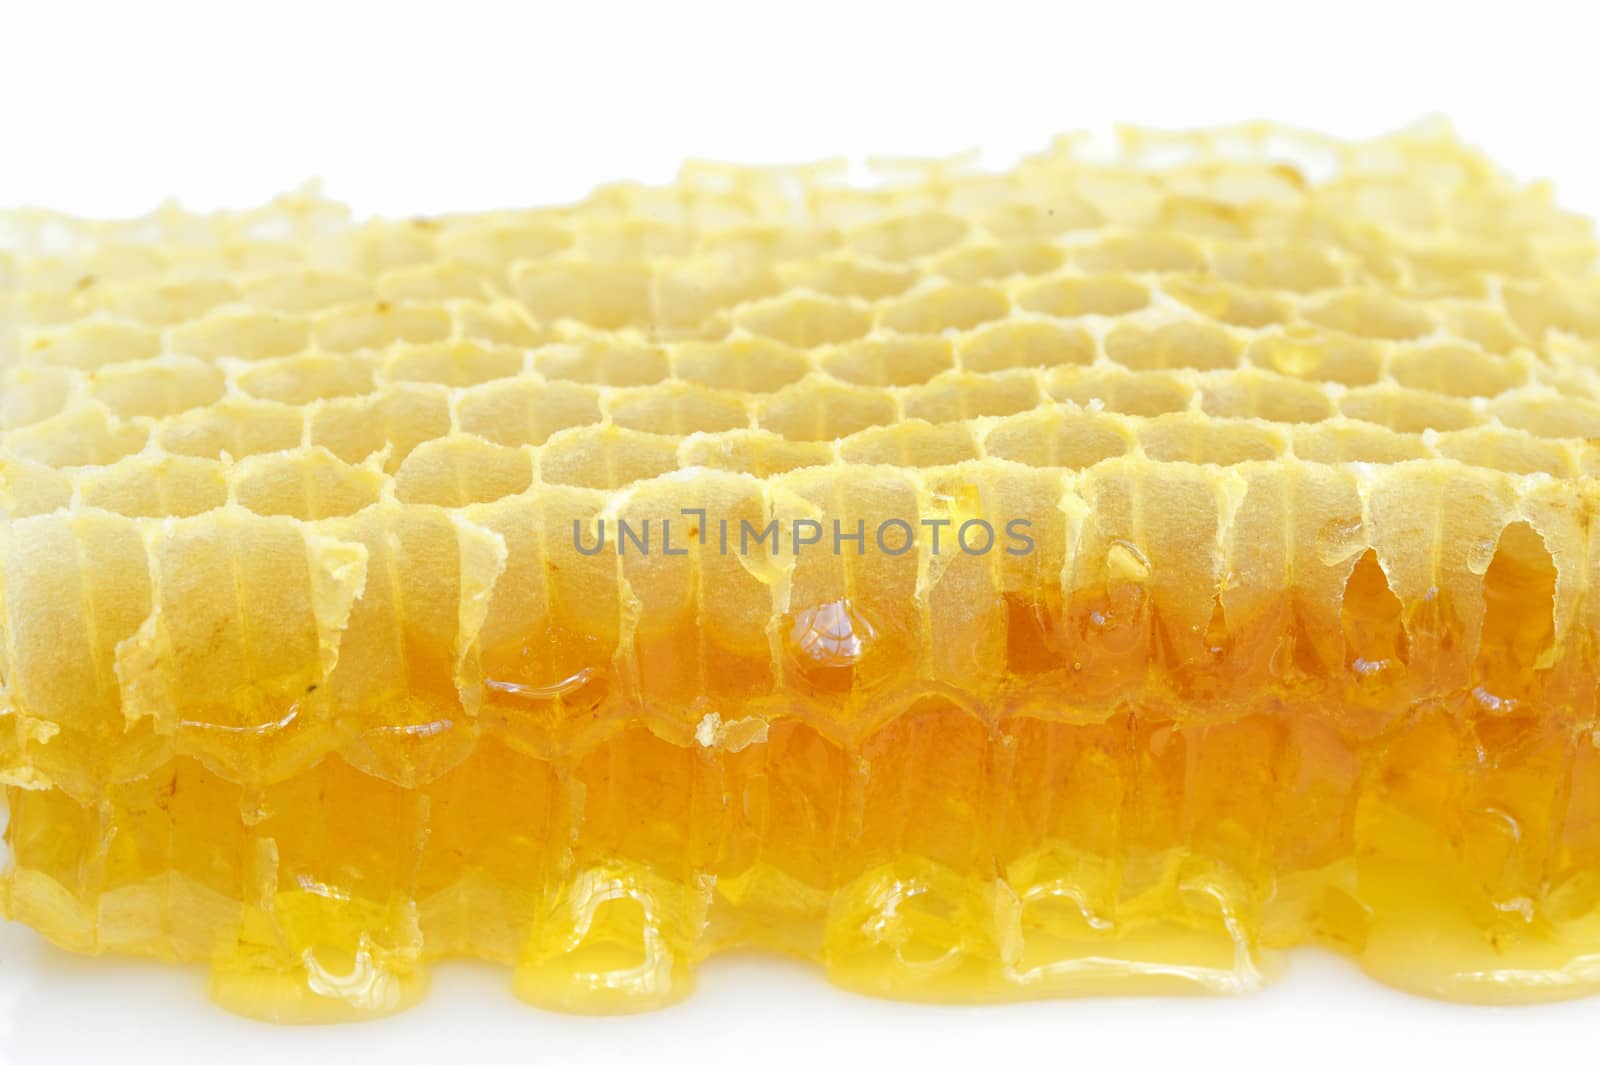 Honey honeycombs on the white background